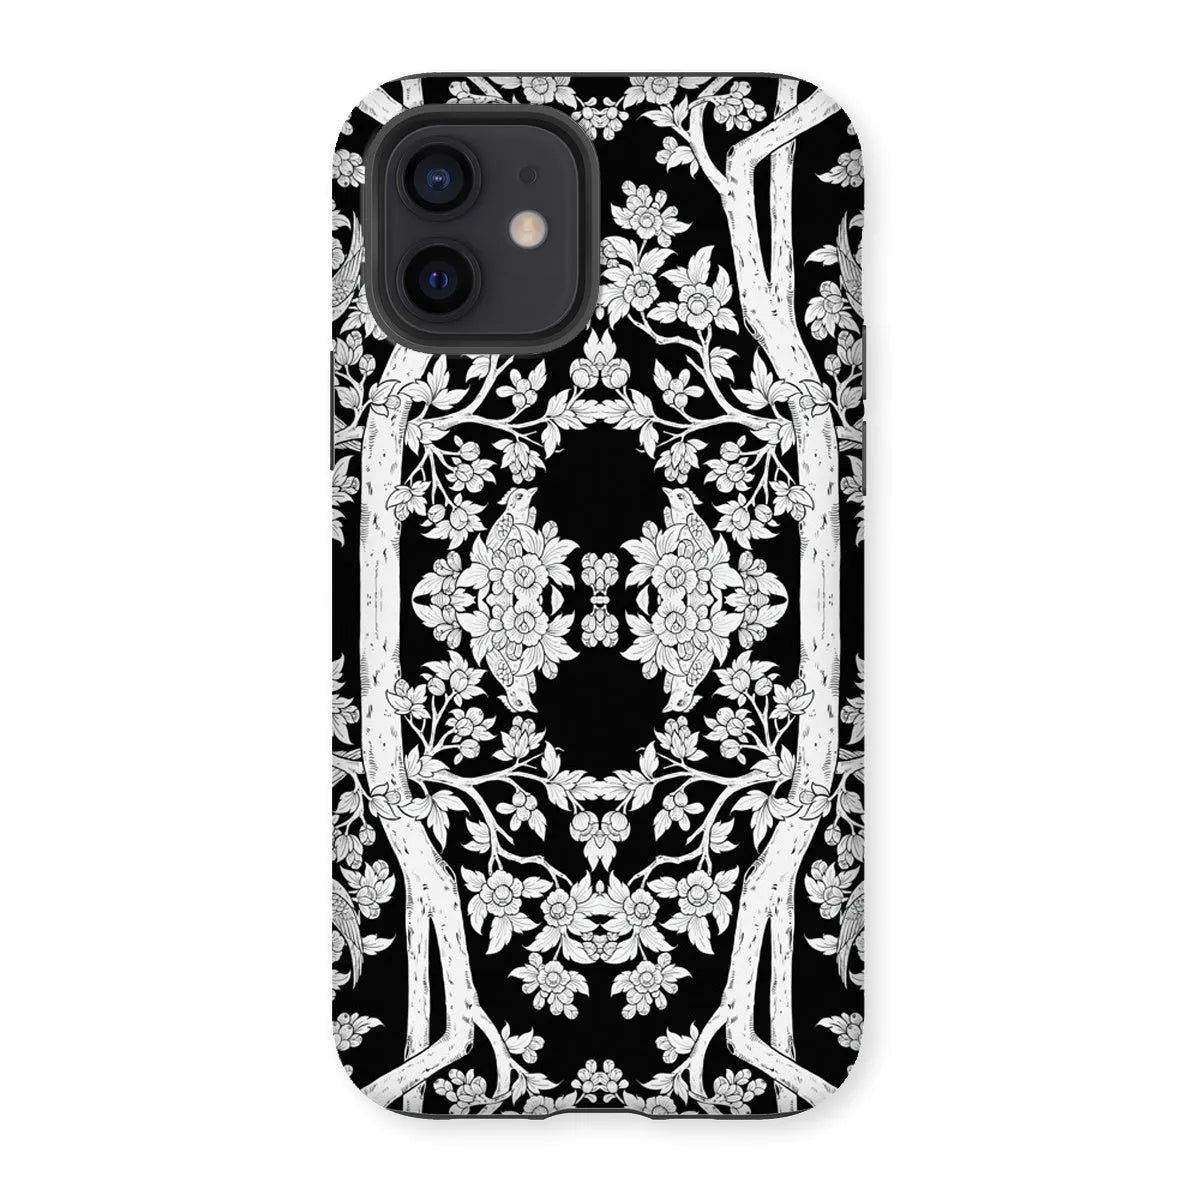 Aviary Black Aesthetic Pattern Art Phone Case - Iphone 12 / Matte - Mobile Phone Cases - Aesthetic Art